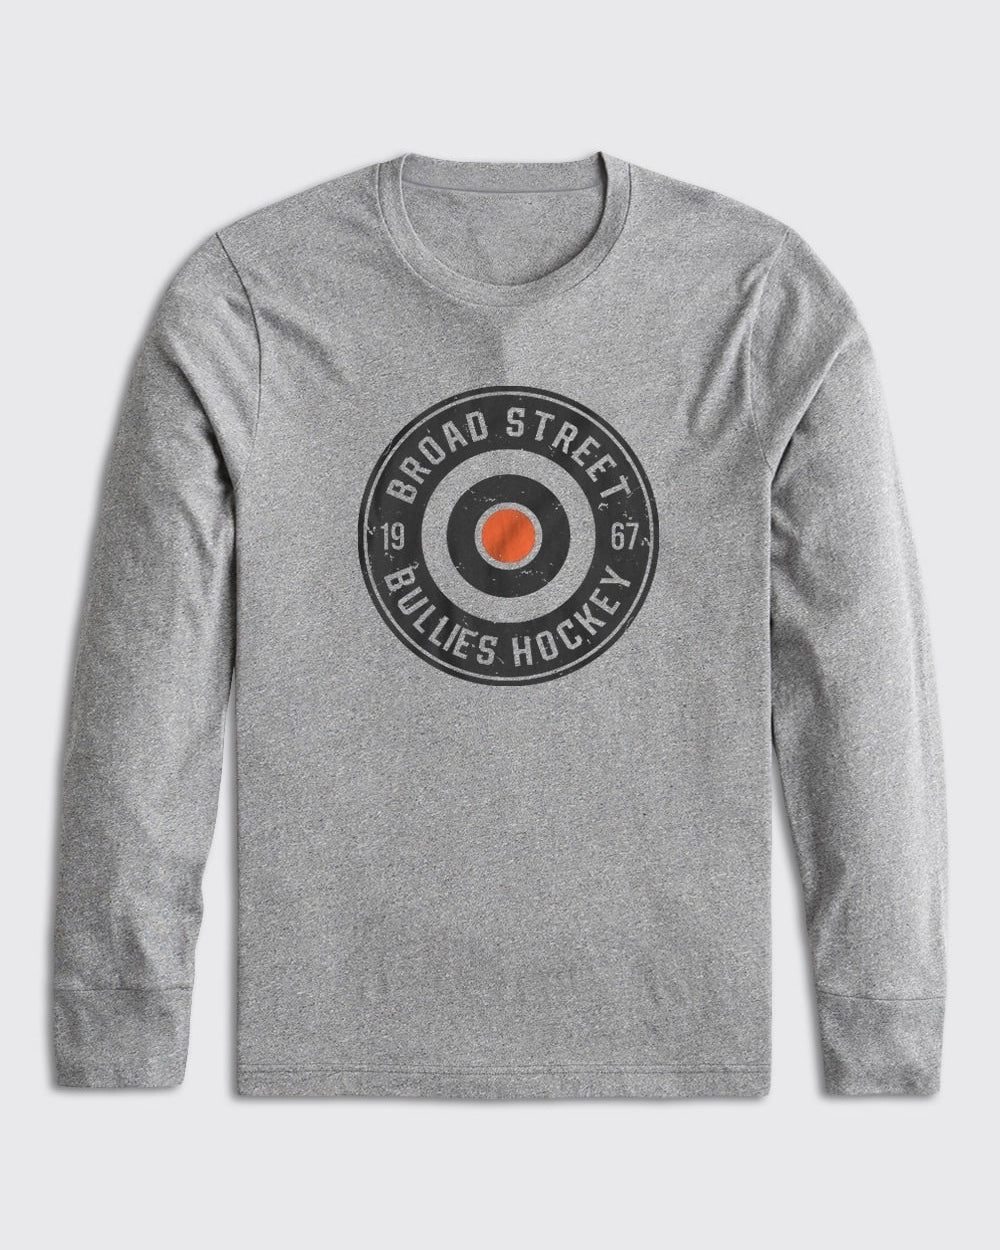 Philadelphia Flyers-Broad Street Bullies Hockey Long Sleeve-Athletic Heather-Philly Sports Shirts